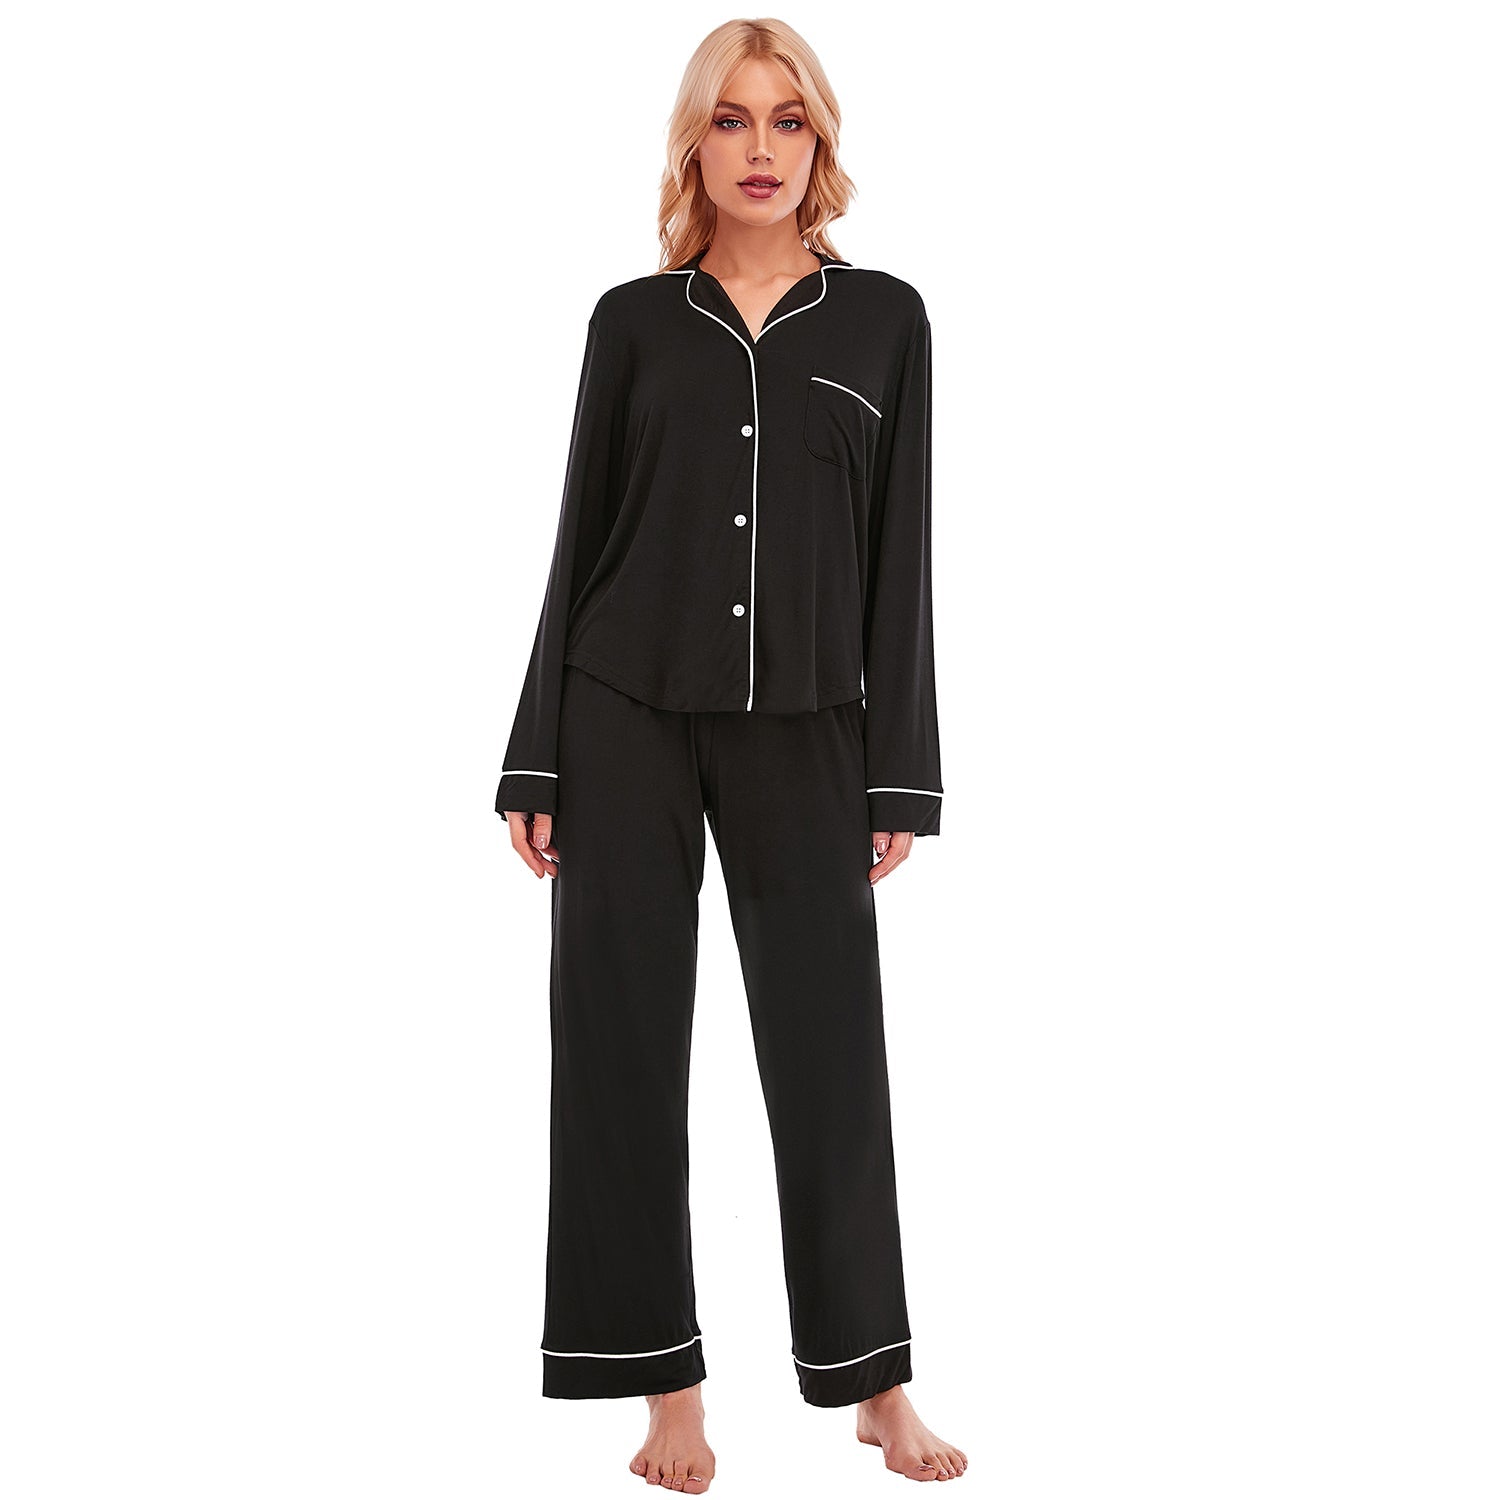 LUBOT Women's Modal Pajamas Set Two-piece PJ Set - Gexworldwide